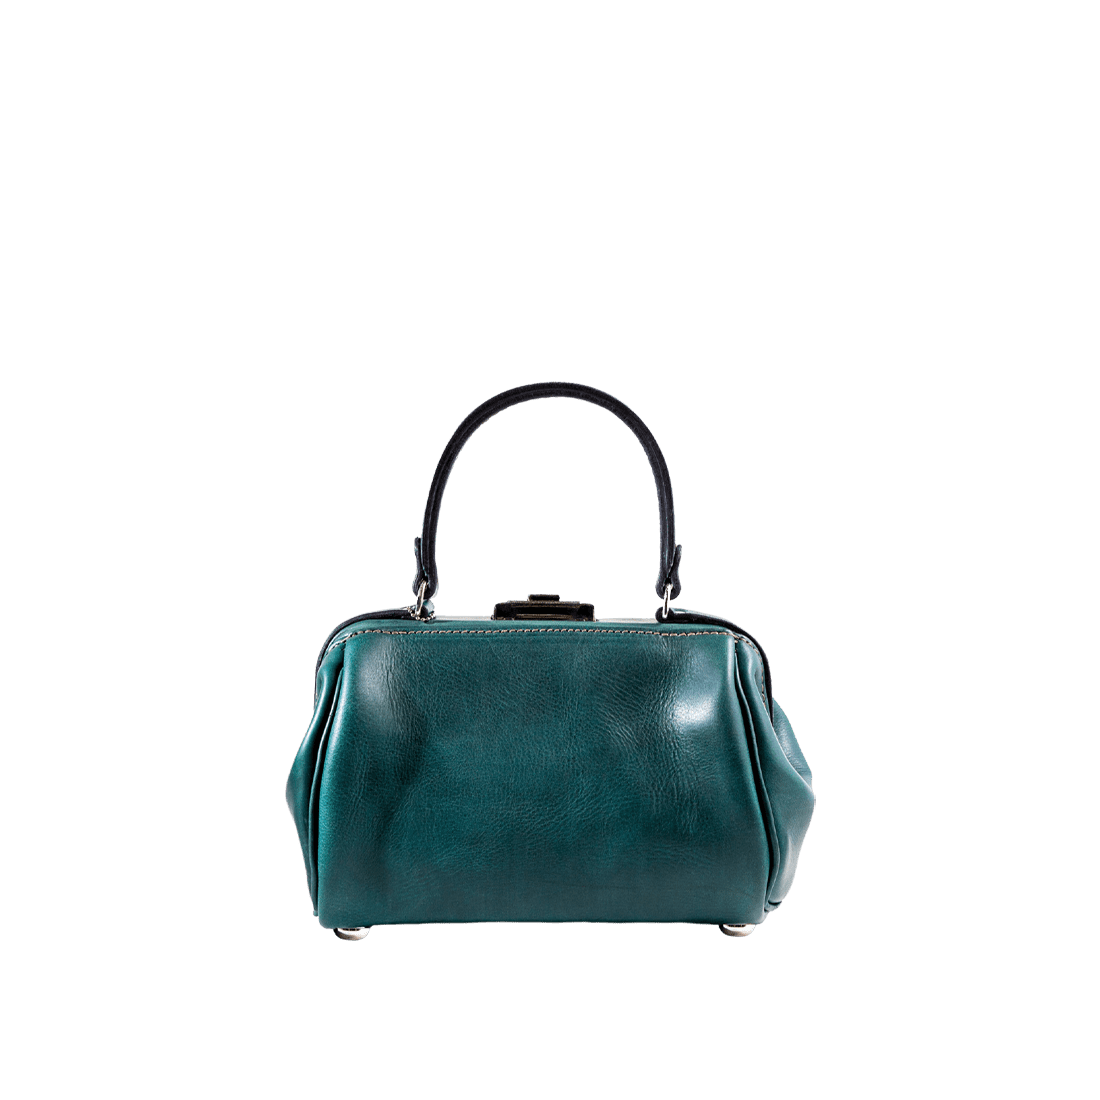 The Gladstonette - The perfect Ladies' bag - Mackenzie Leather Edinburgh